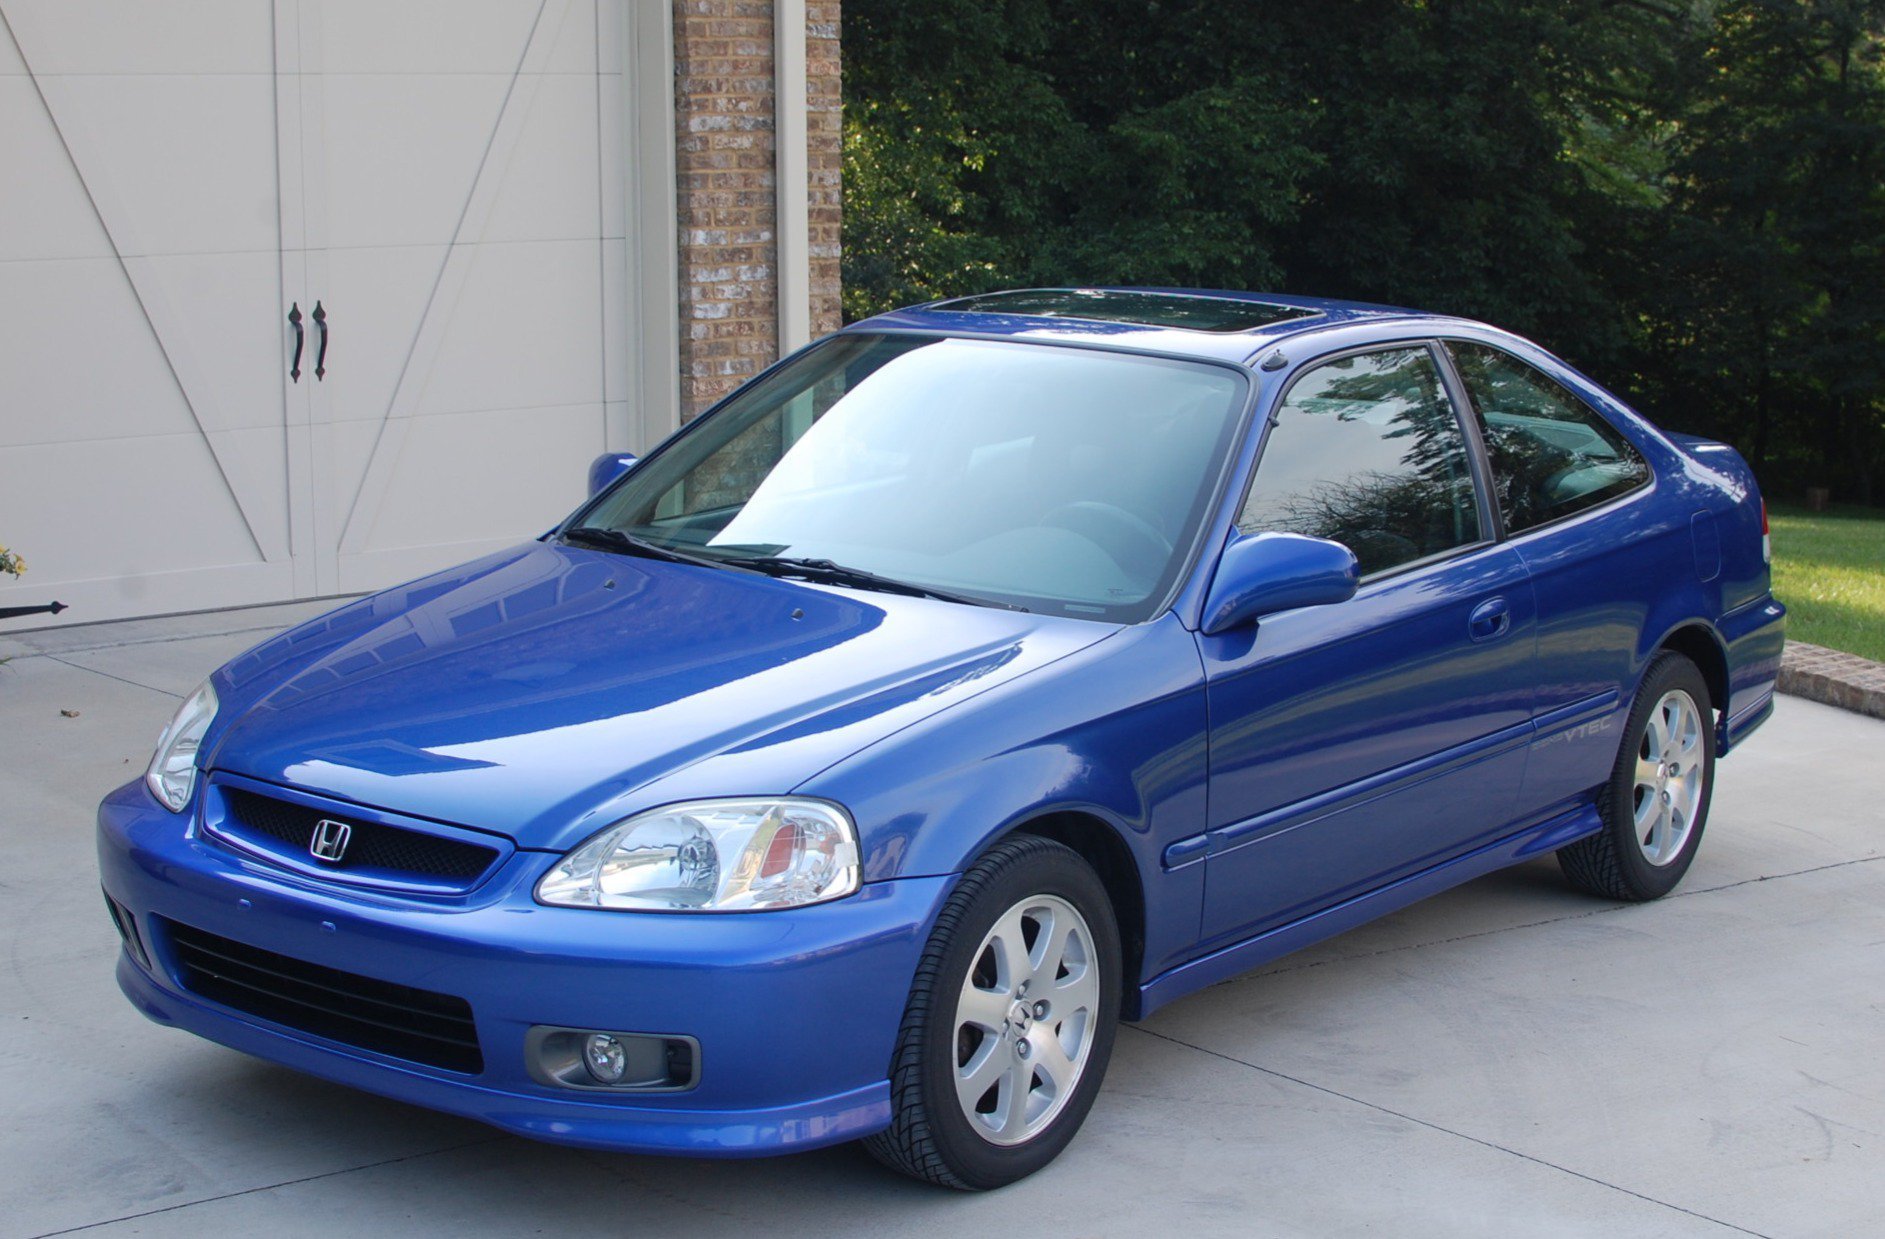 Honda civic 2000 года. Honda Celica 1999. Honda Civic 1999-2000. Хонда Цивик седан 1999. Honda Civic 1999.